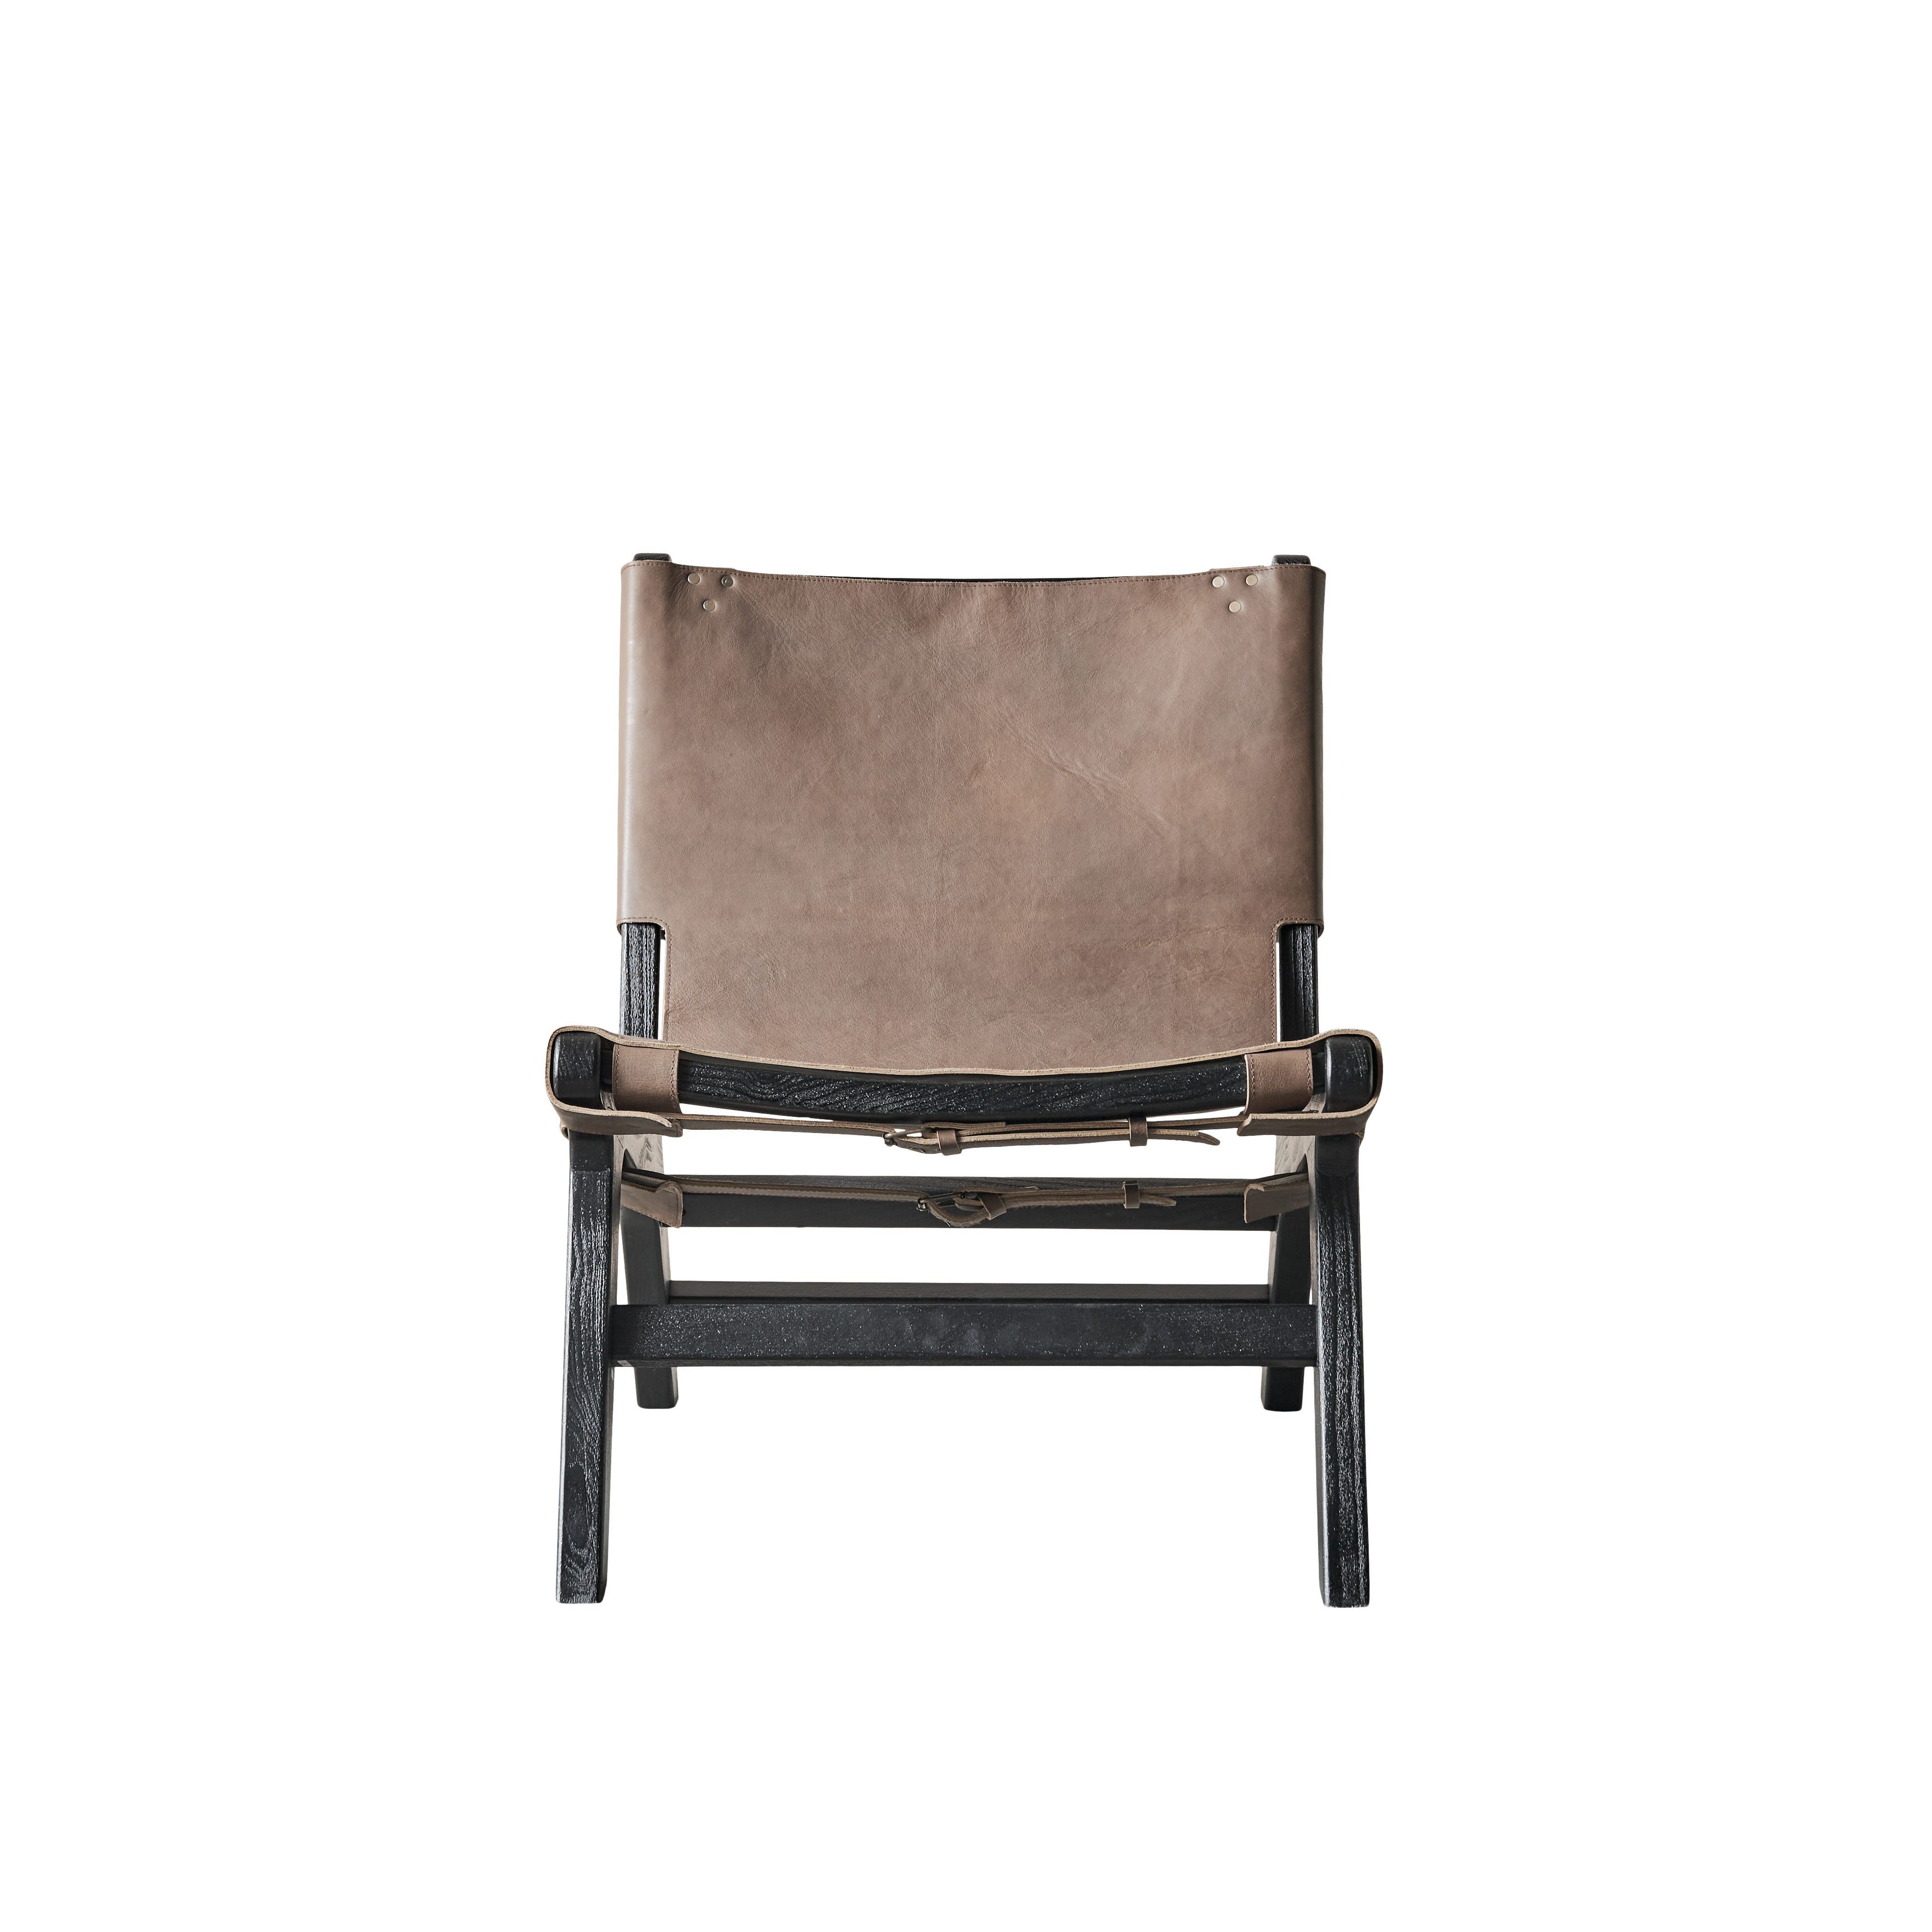 MUUBS Καρέκλα Πολυθρόνα Philosophy Ξύλο/Δέρμα Μαύρο/Καφέ H:77xB:61xD:52 cm MUUBS